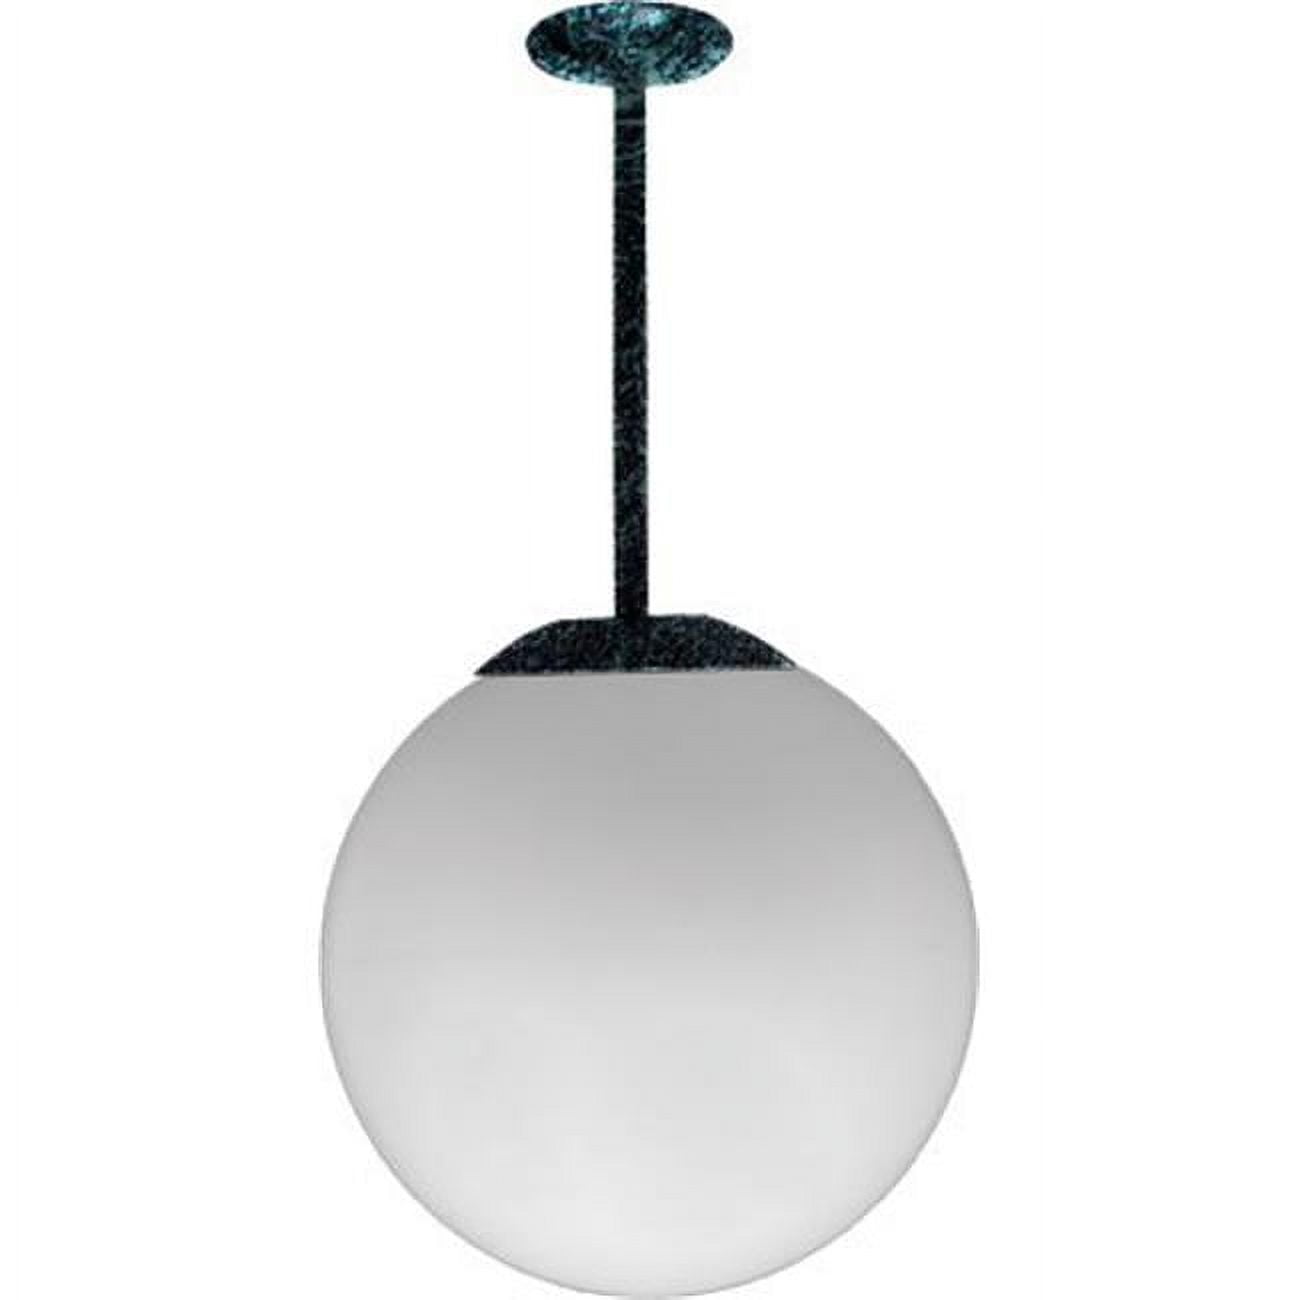 D7516-12-vg 18 In. 120 V 50 Watts Ceiling Globe Fixture 12 In. Drop With Metal Halide Lamp, Verde Green